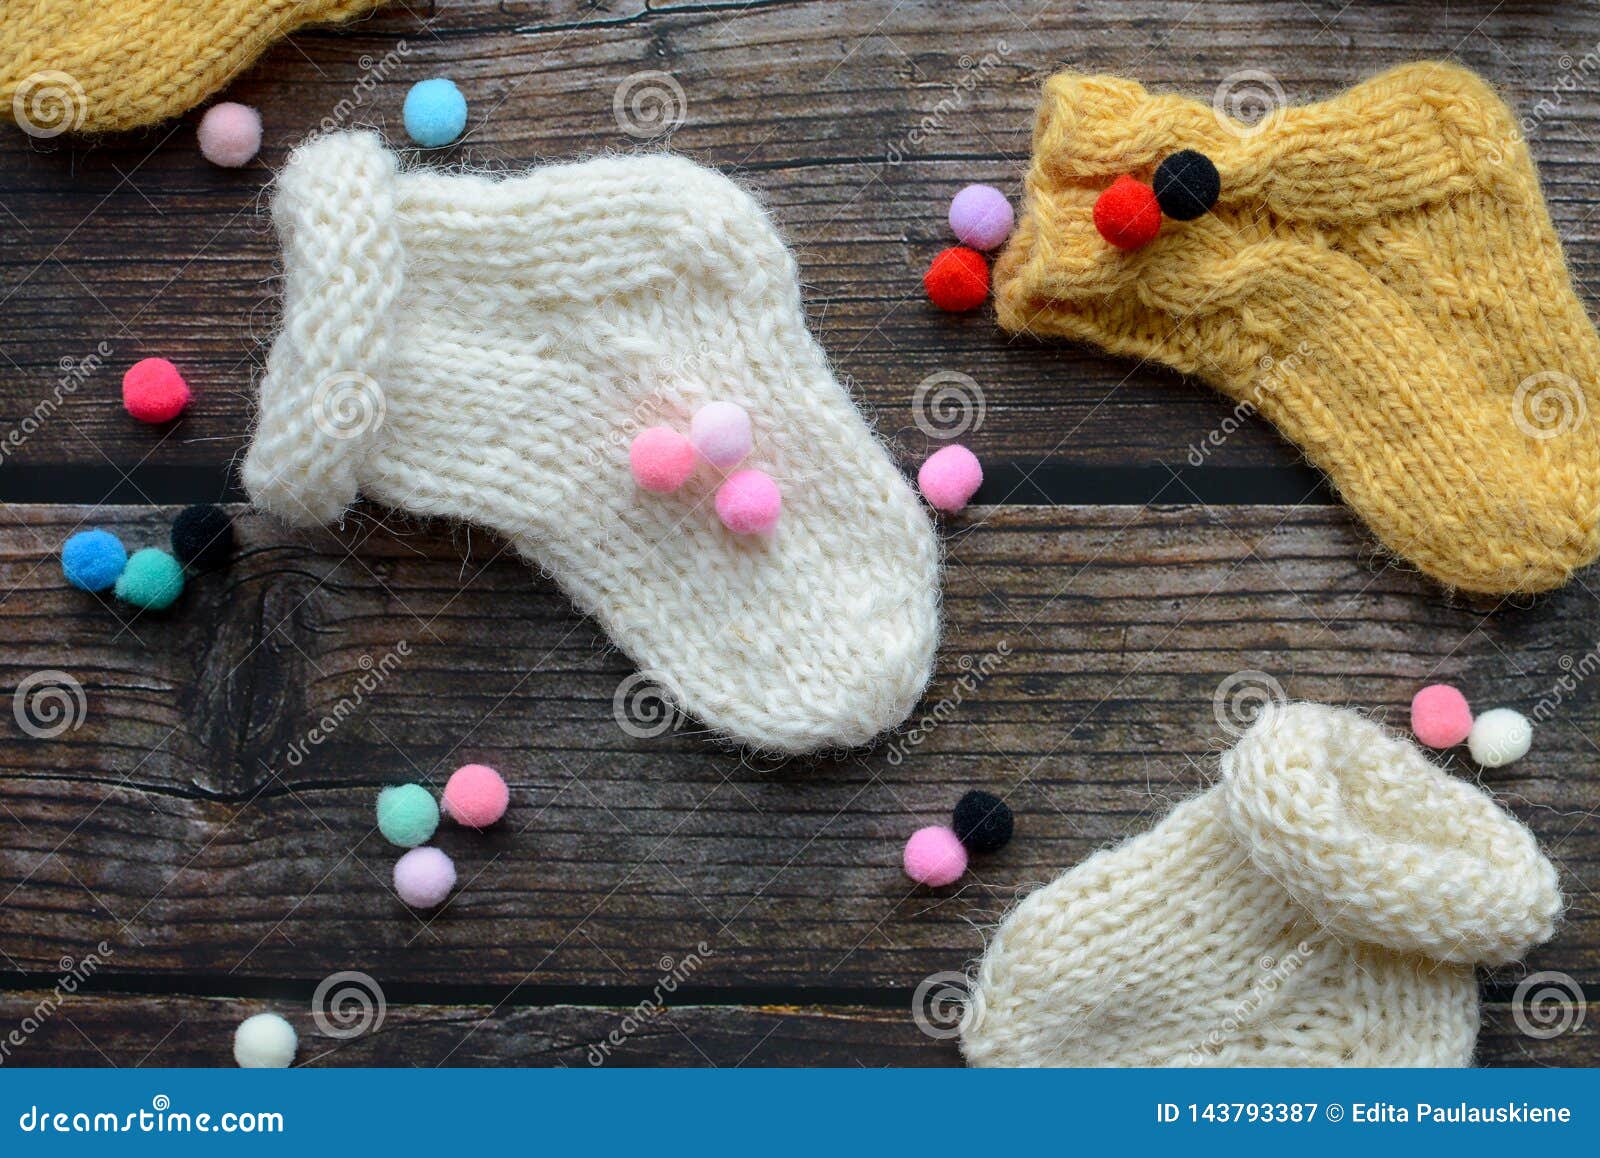 Several Pairs of Handmade Woolen Socks for Newborn Stock Image - Image ...